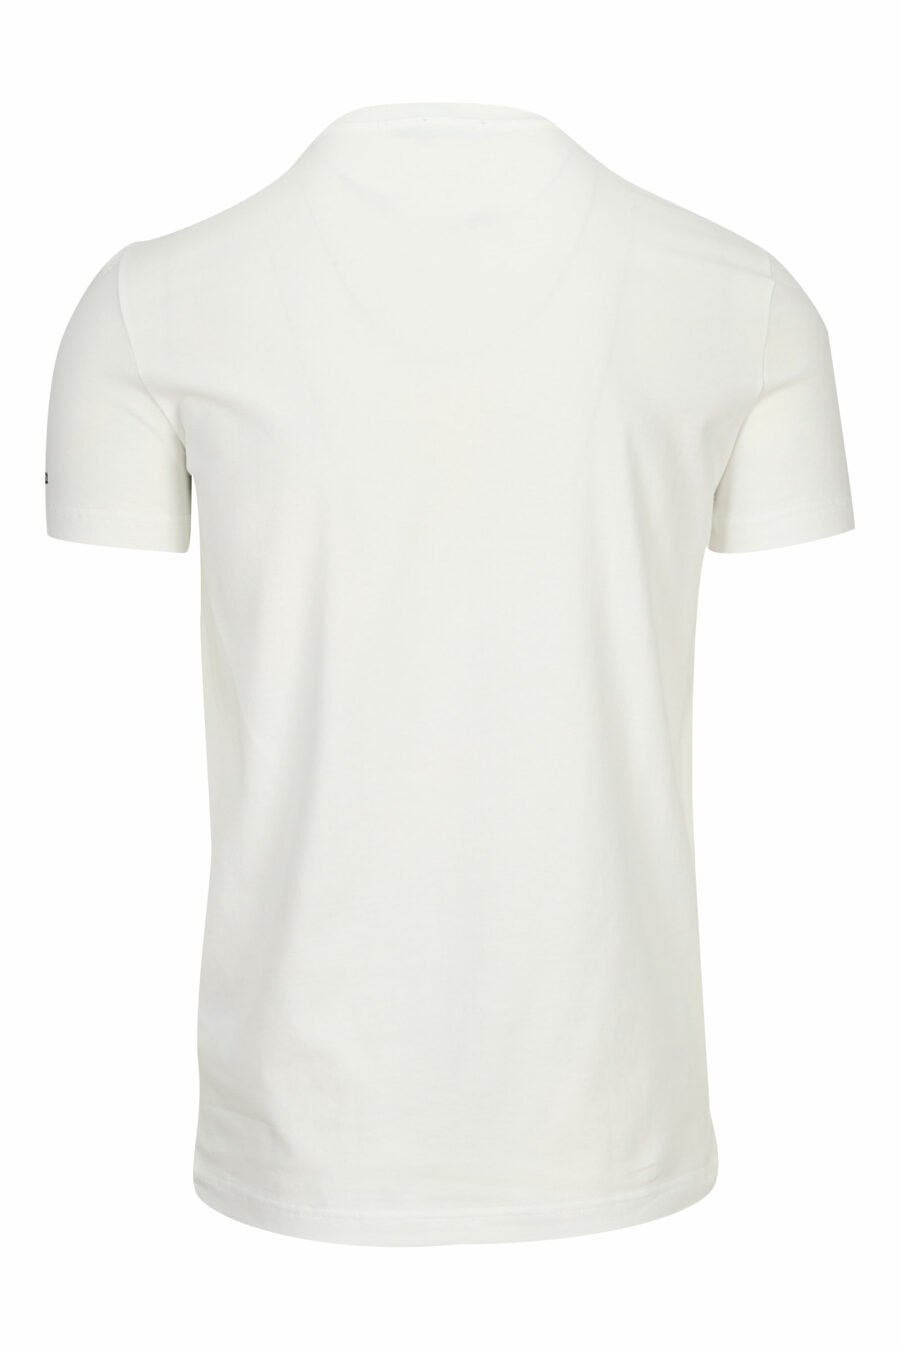 Camiseta blanca con minilogo "underwear" - 8032674811561 1